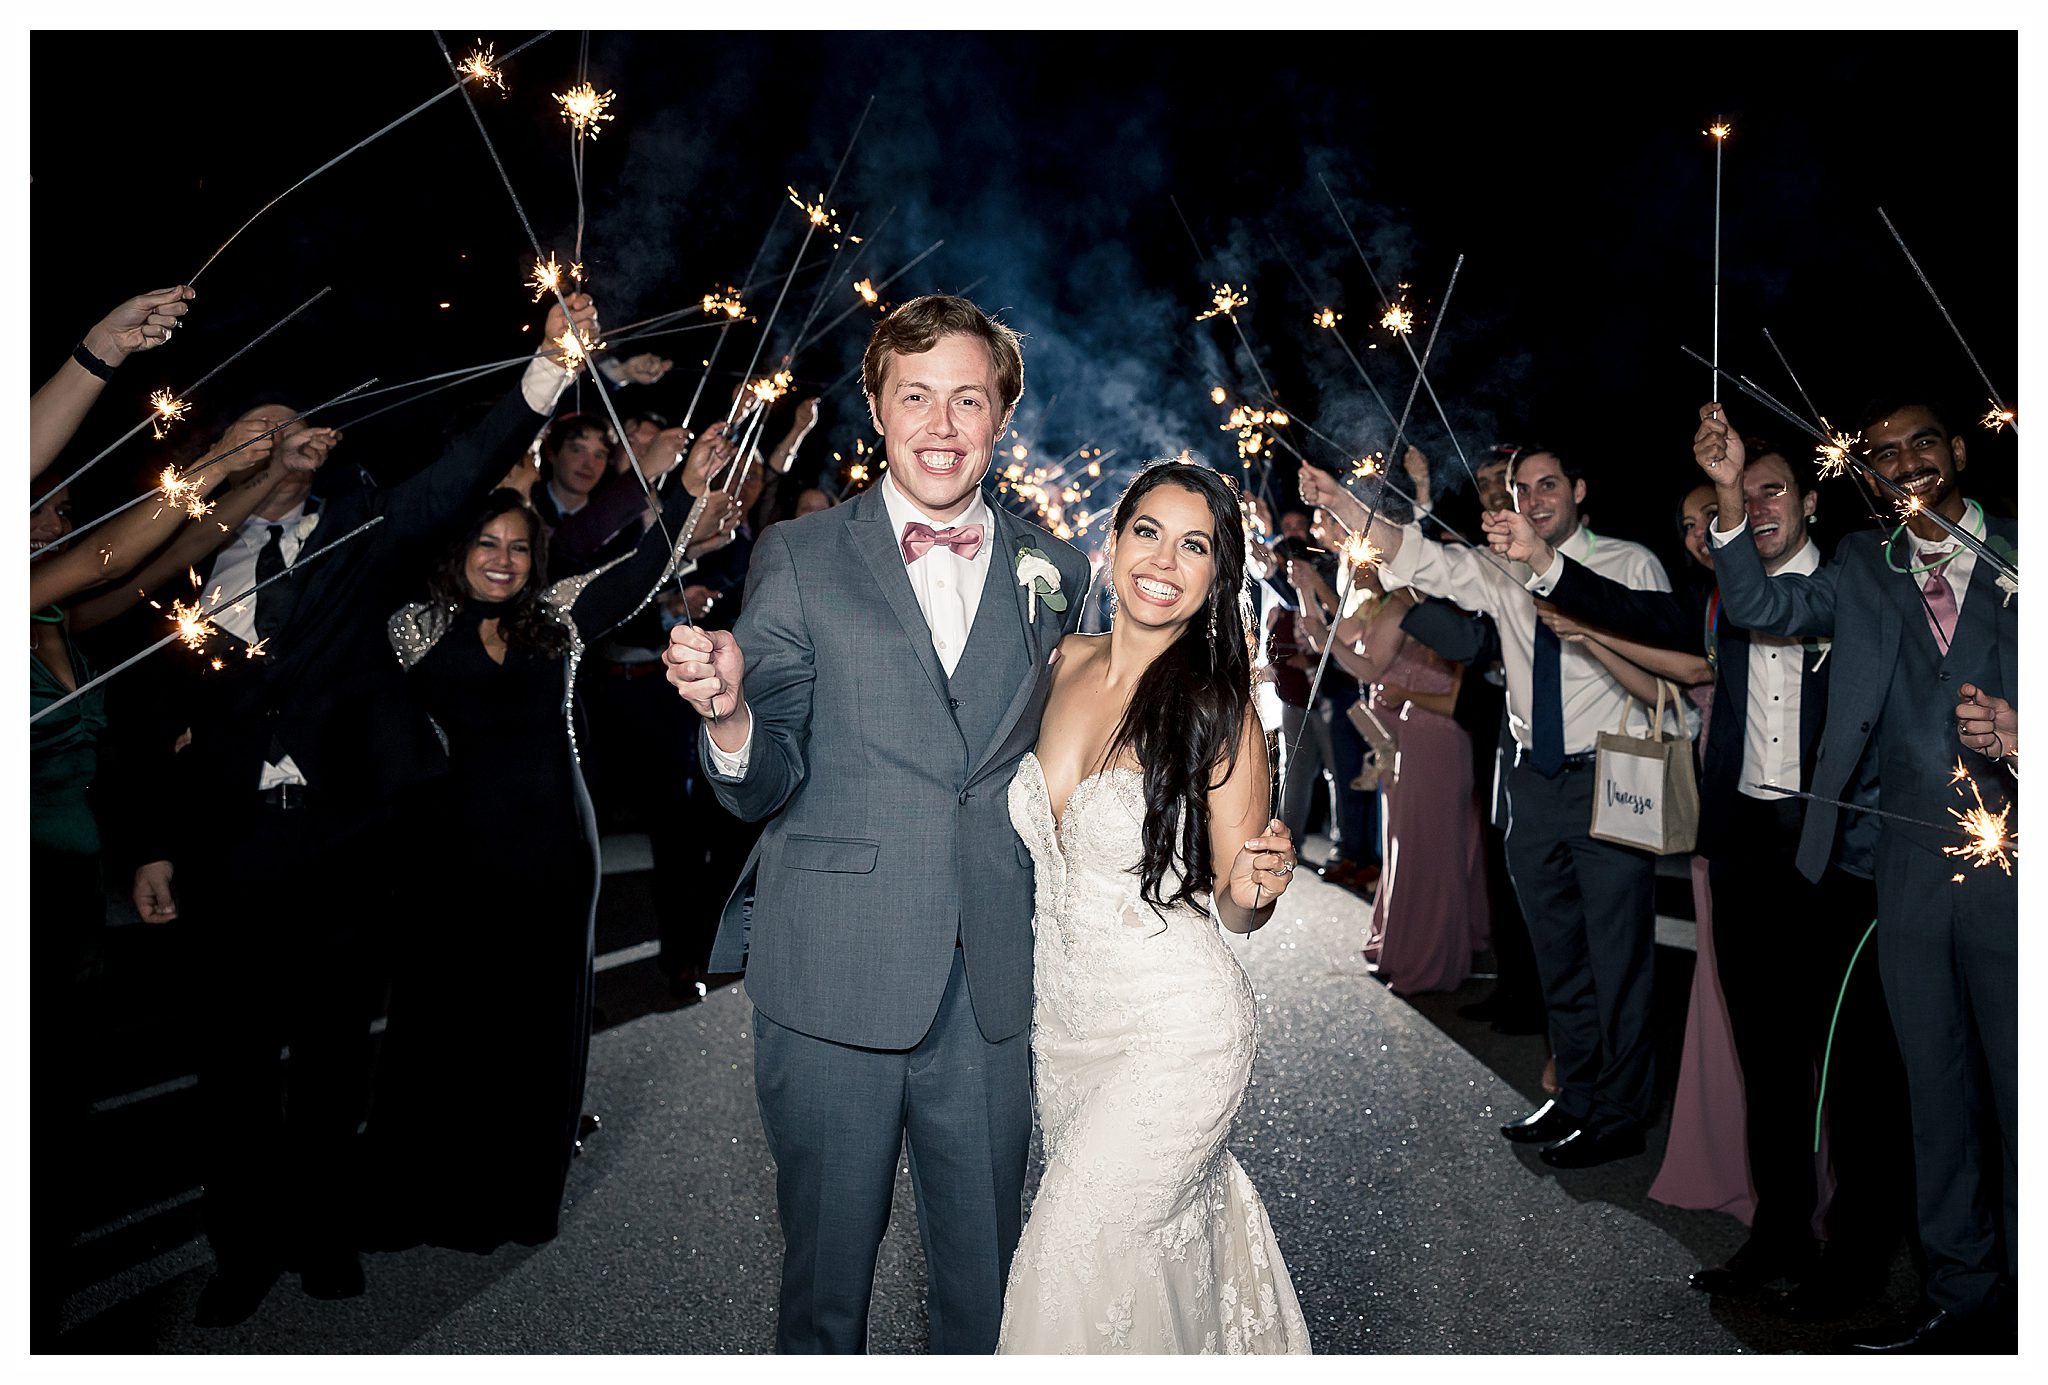 best wedding photographers photos at Ashton Gardens altlanta